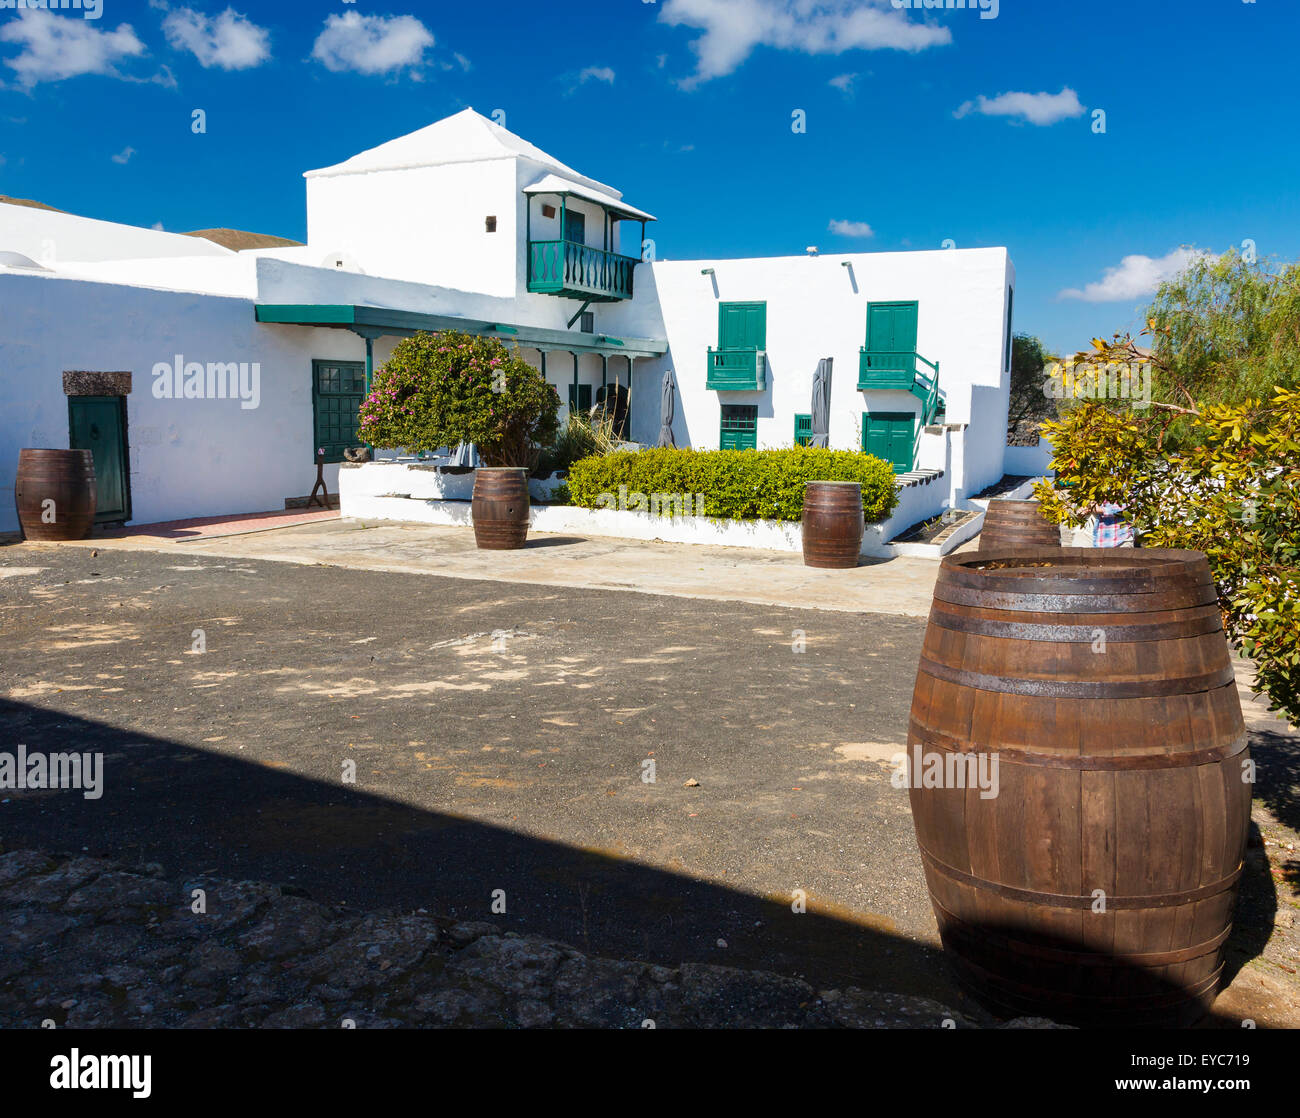 El Grifo Weinkeller. San Bartolome, Lanzarote, Kanarische Inseln, Spanien, Europa. Stockfoto